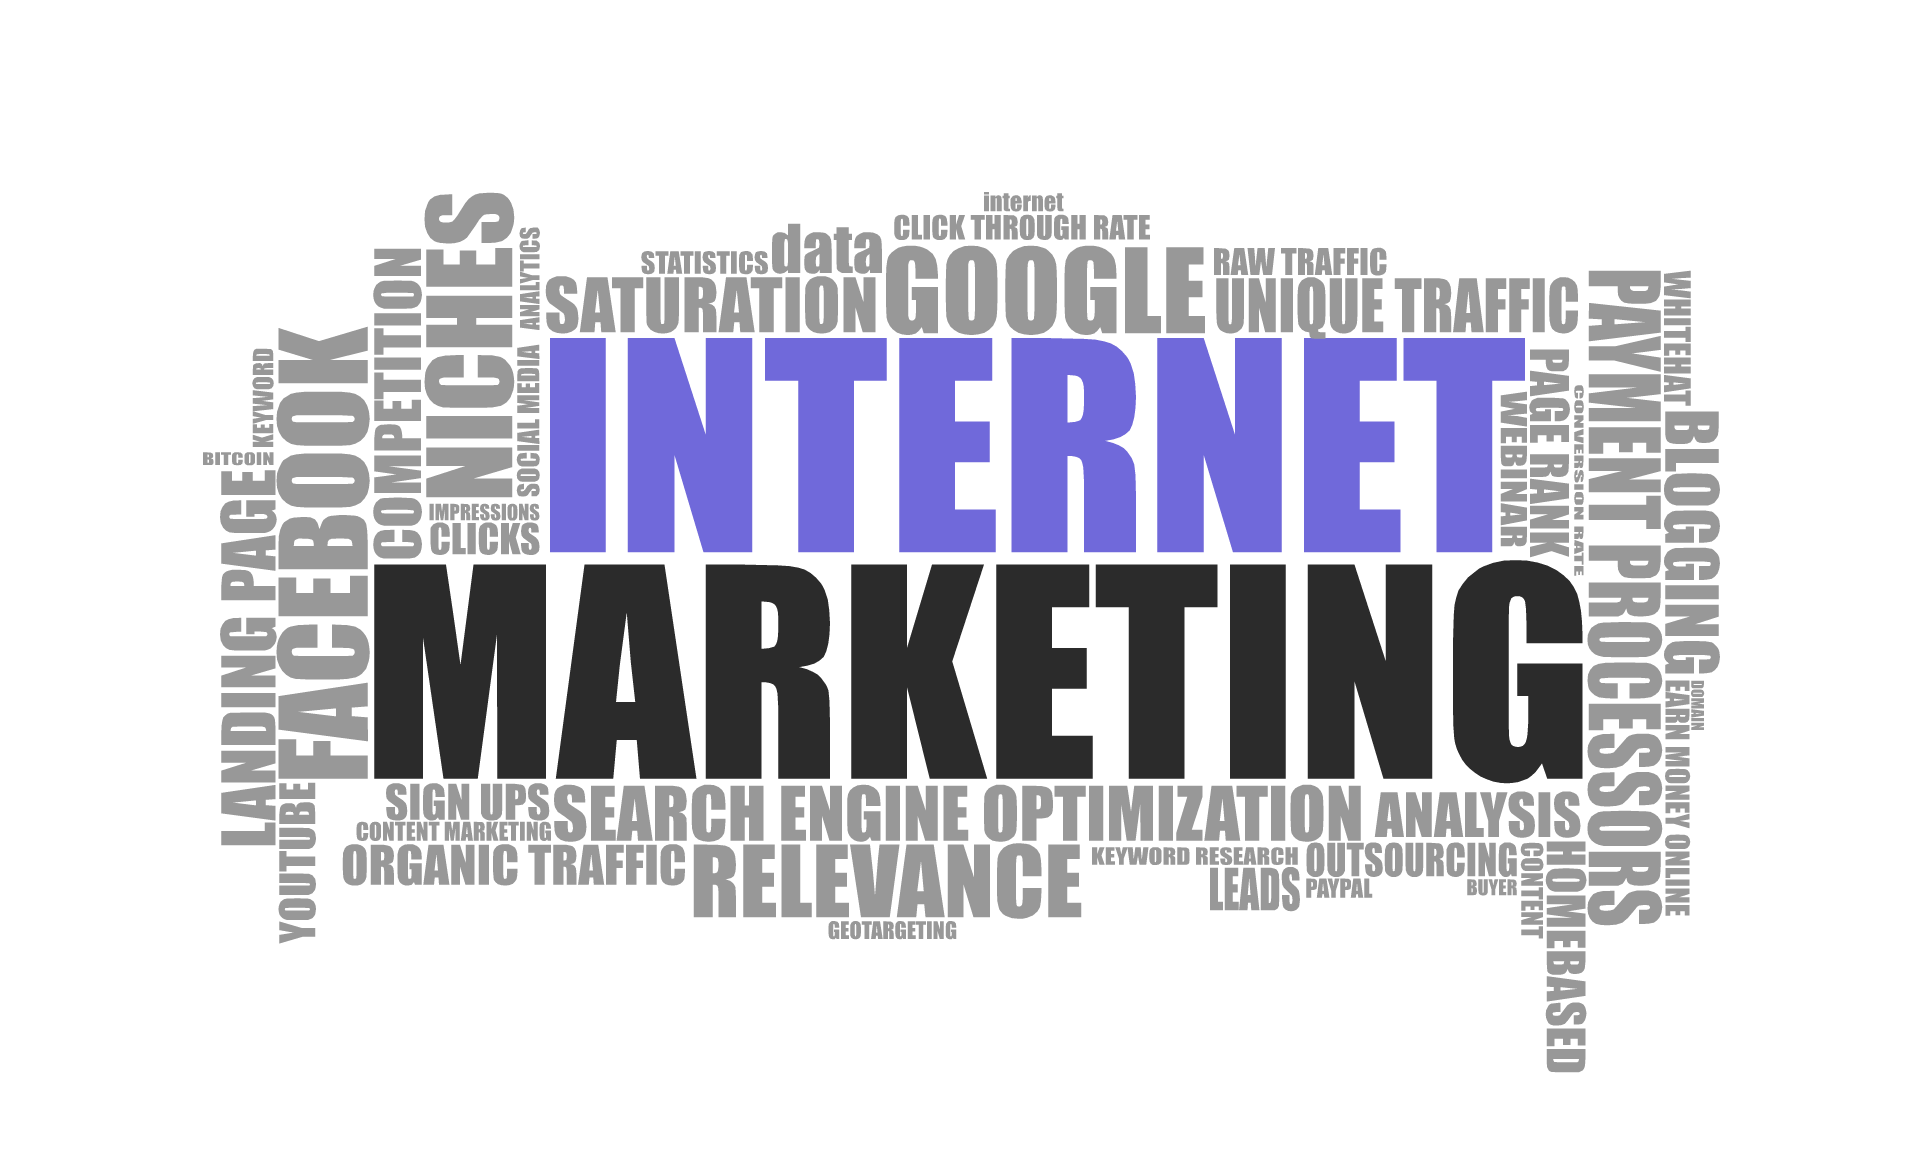 internet marketing, digital marketing, marketing